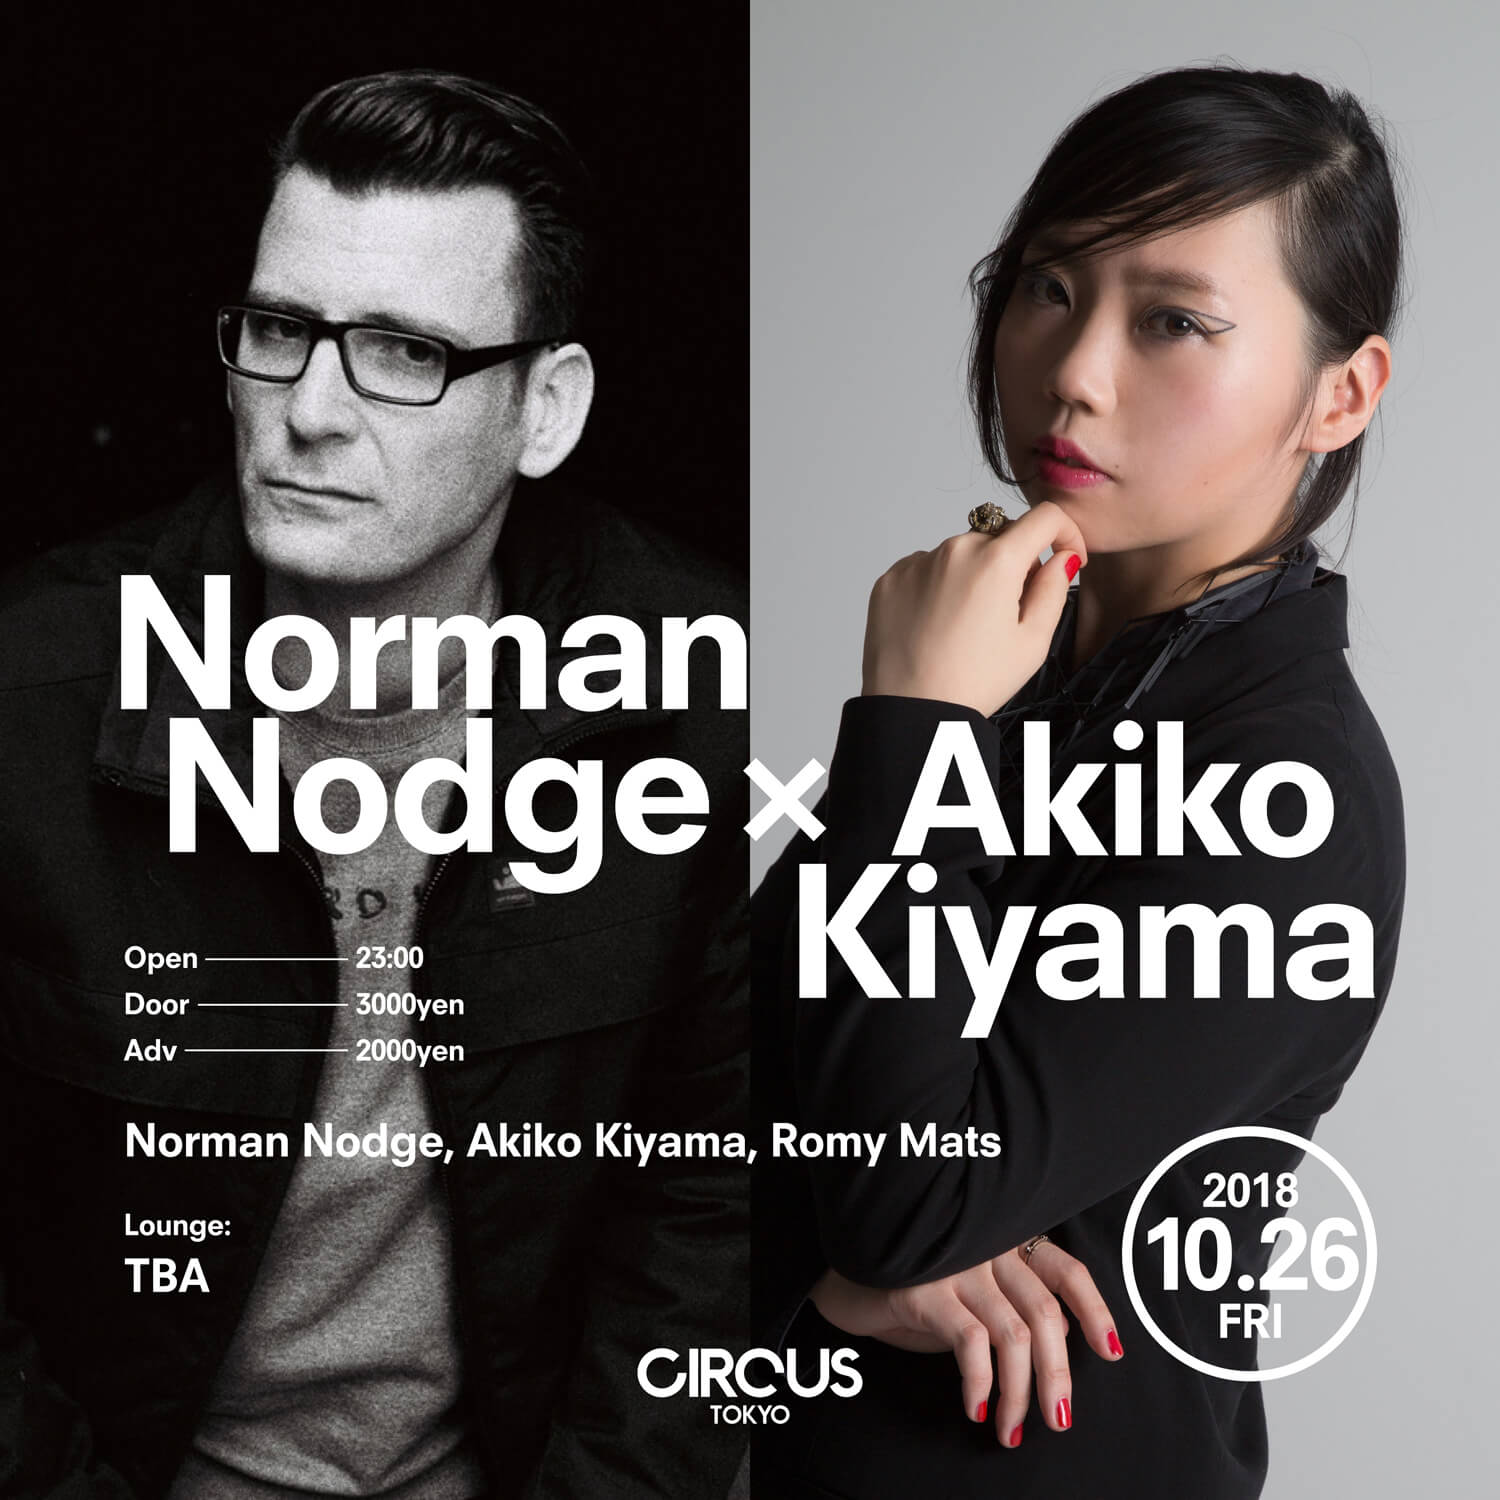 Norman Nodge Akiko Kiyama CIRCUS Tokyo